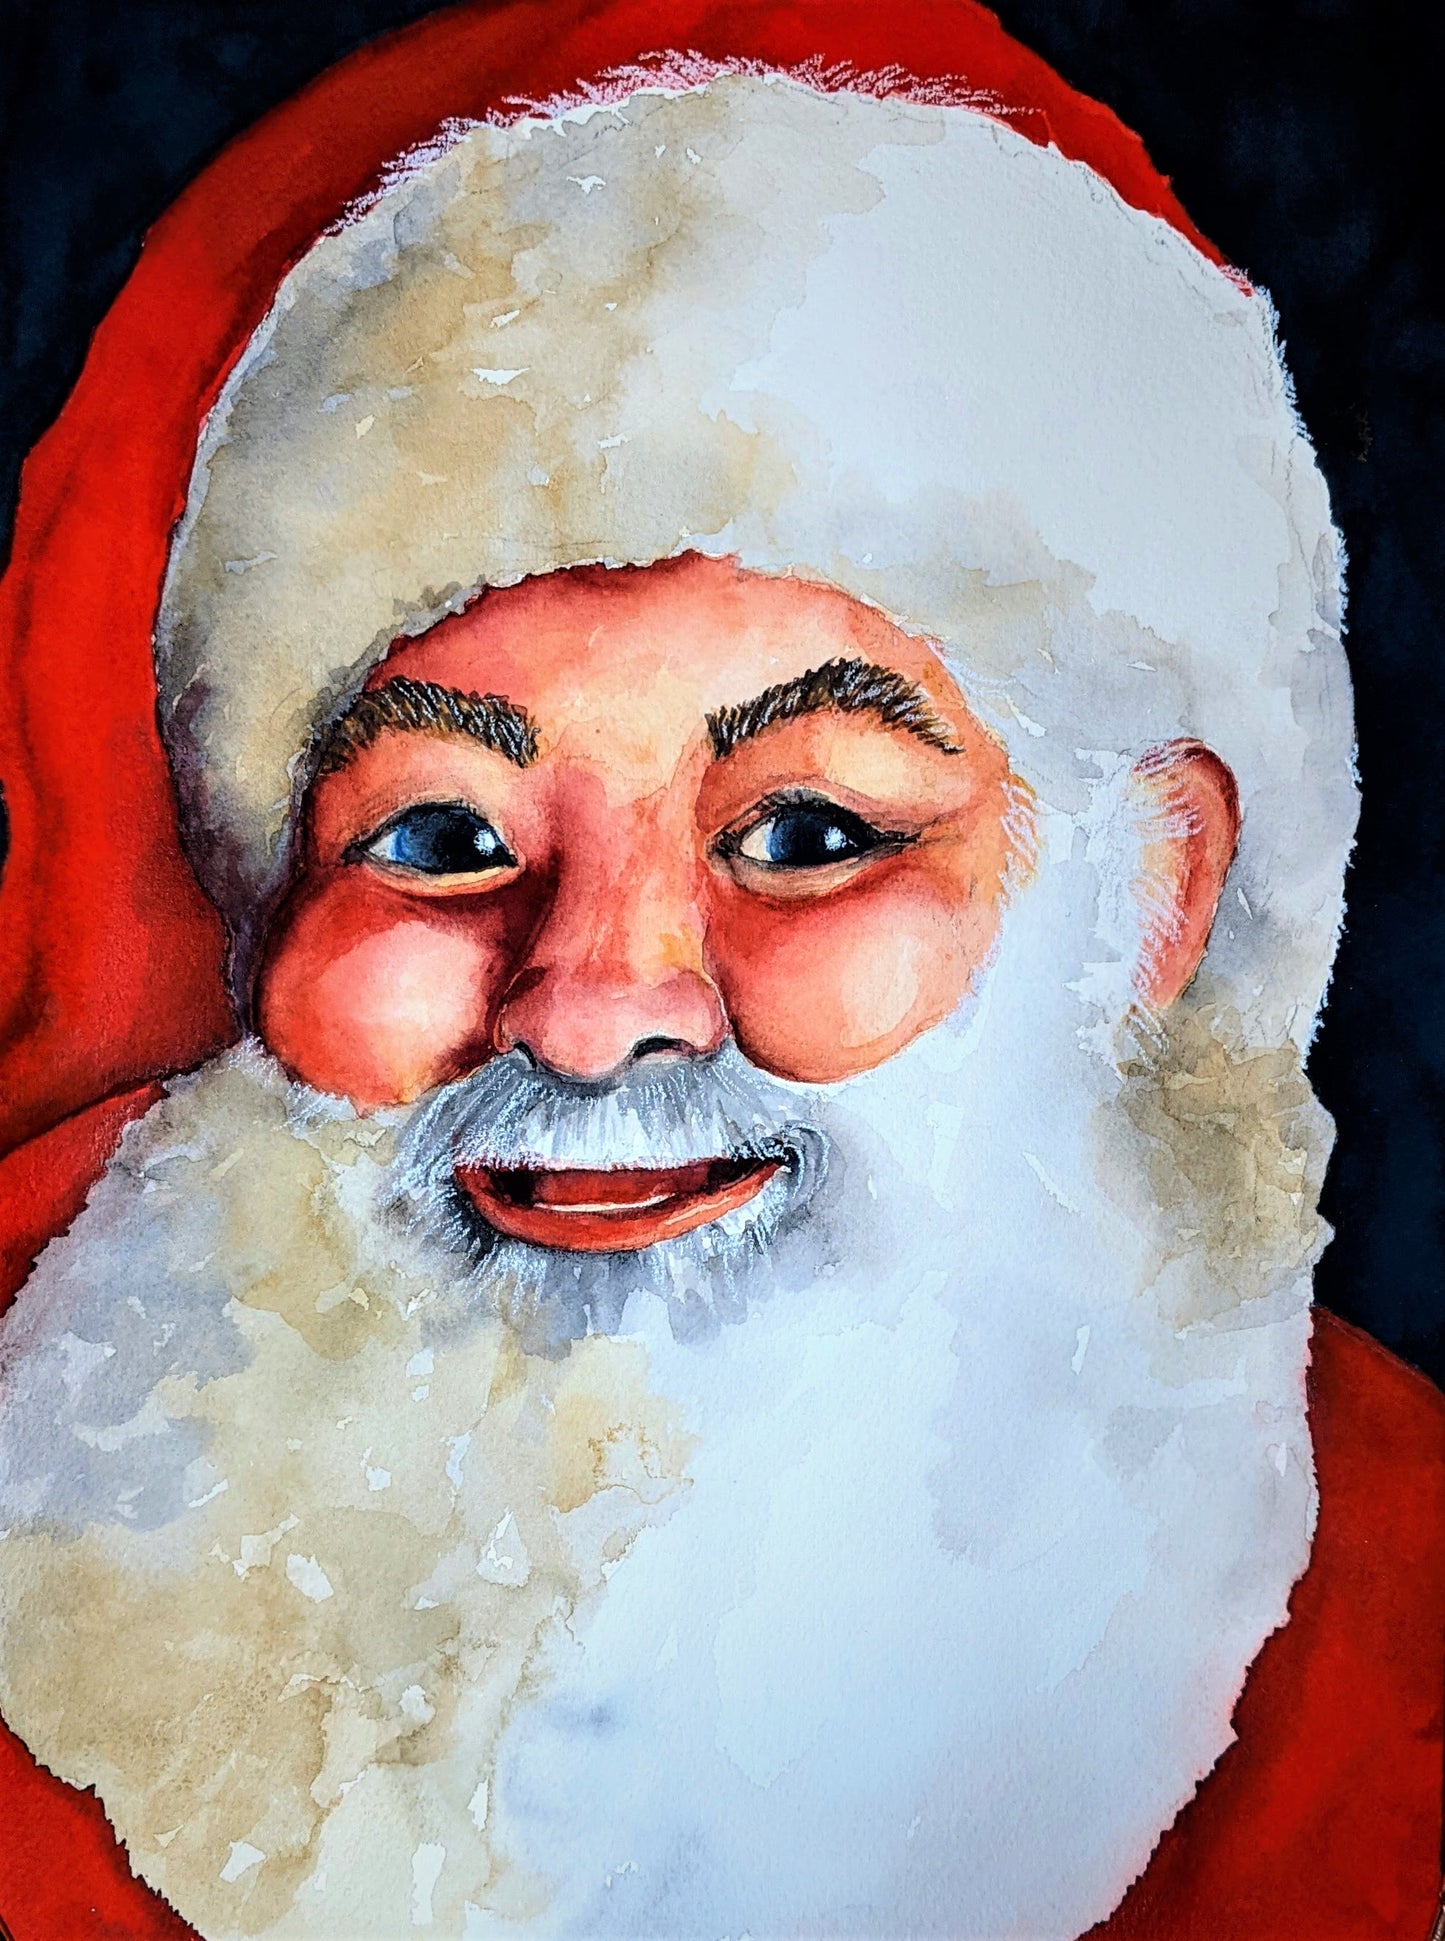 Santa watercolor painting on paper